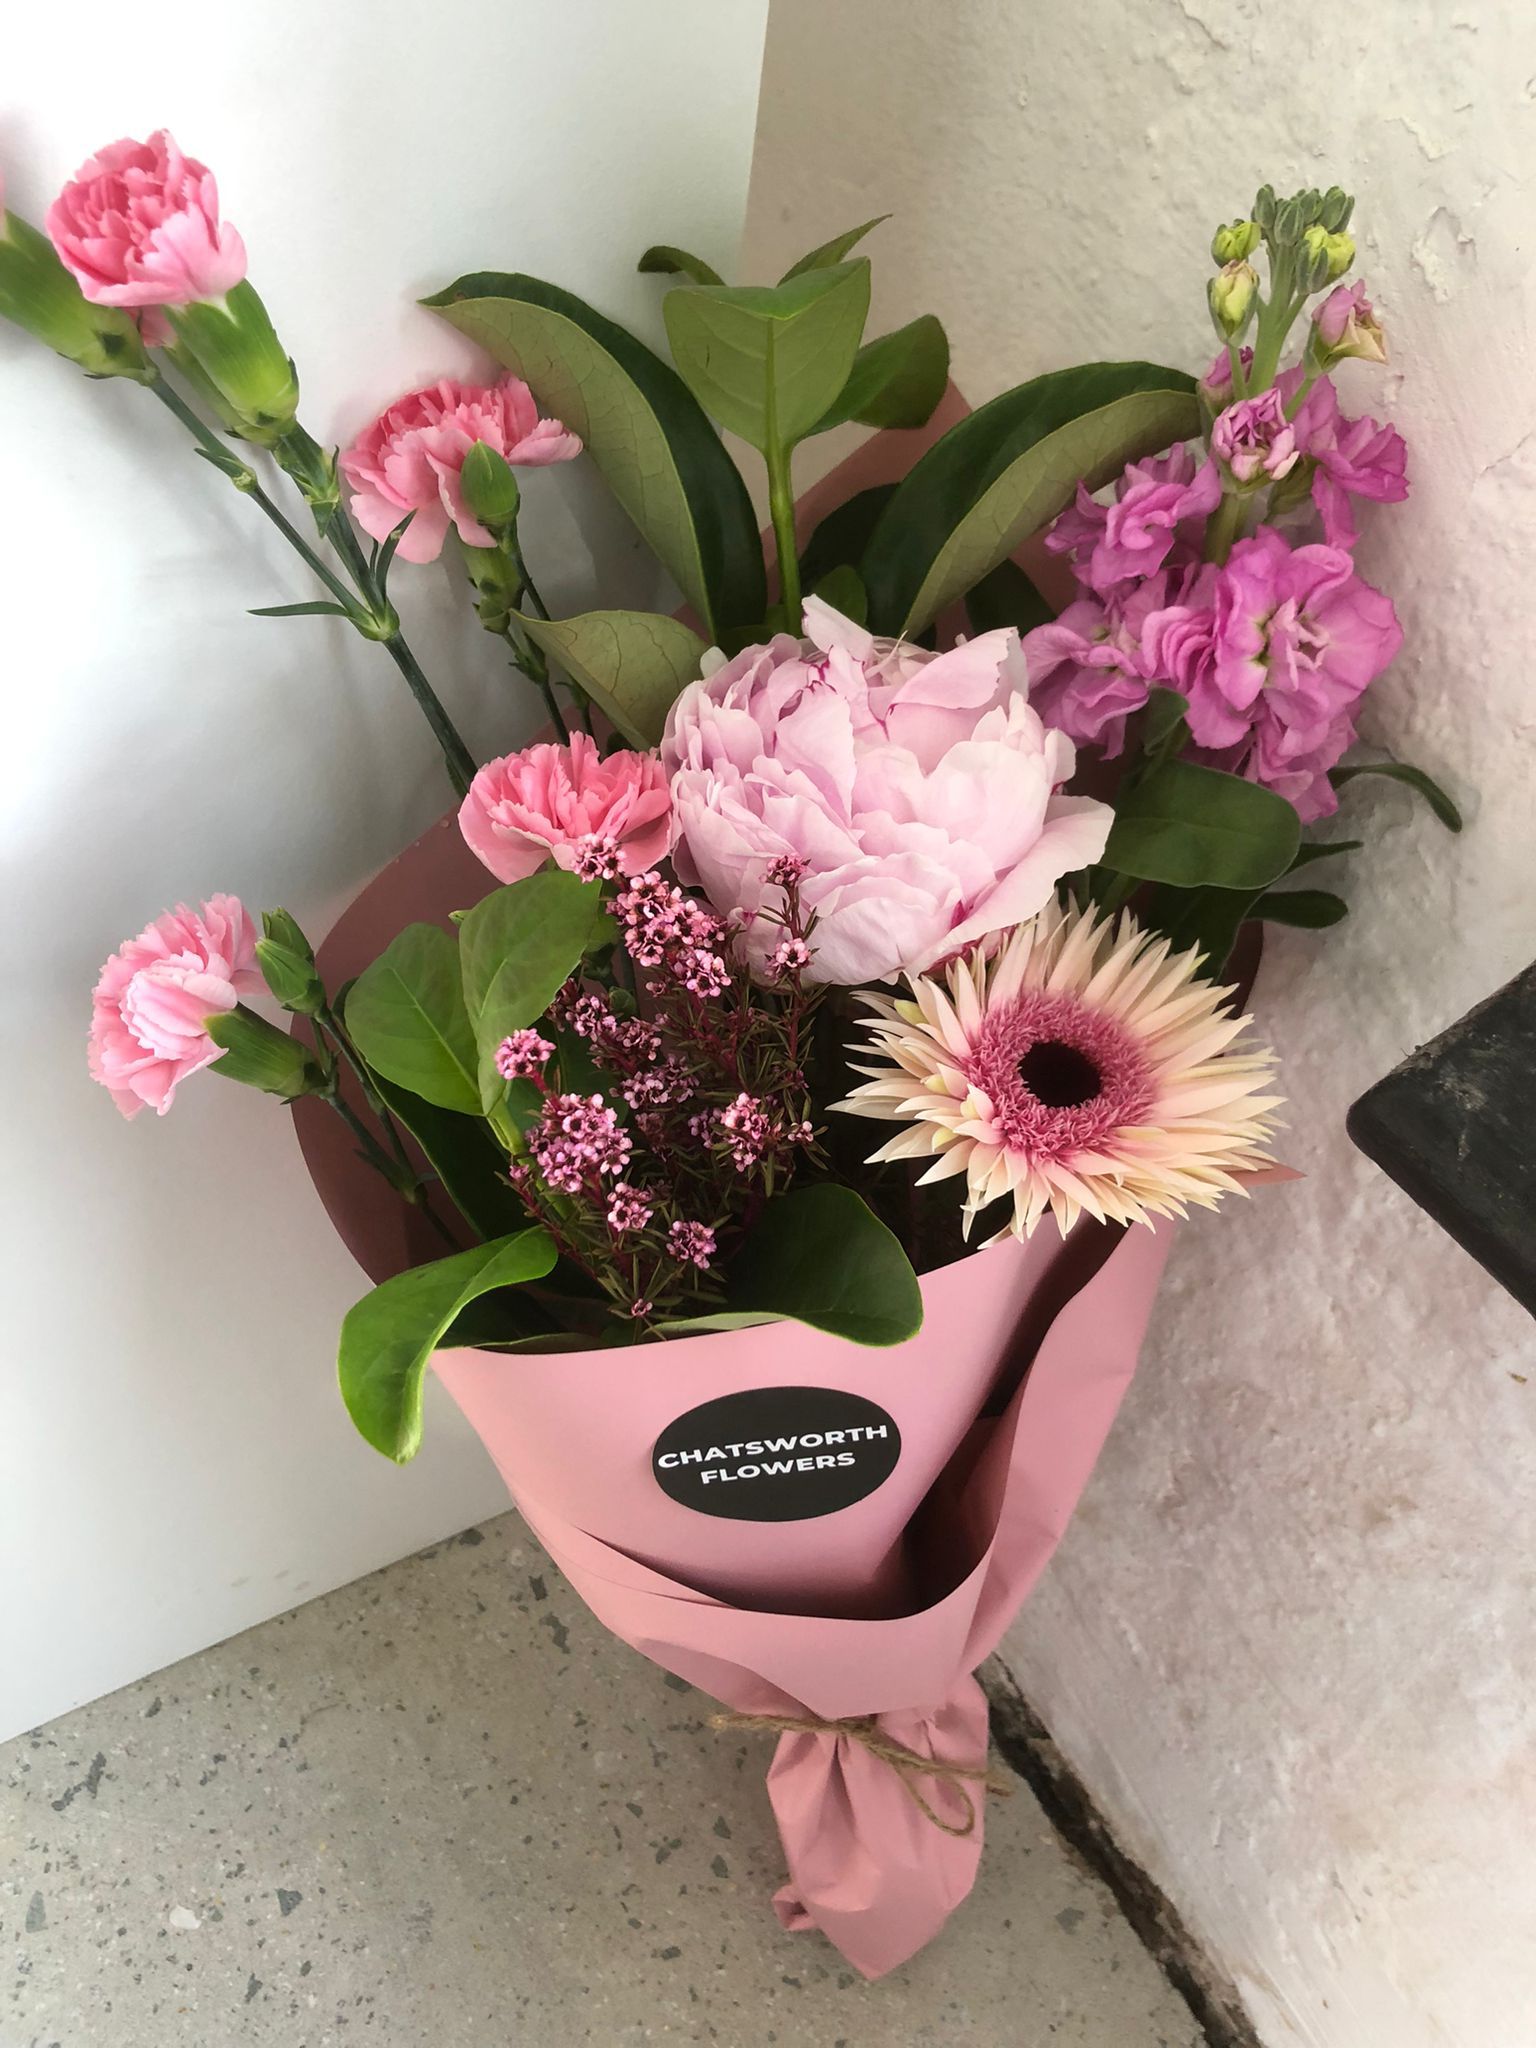 Petite Posy - Chatsworth Flowers